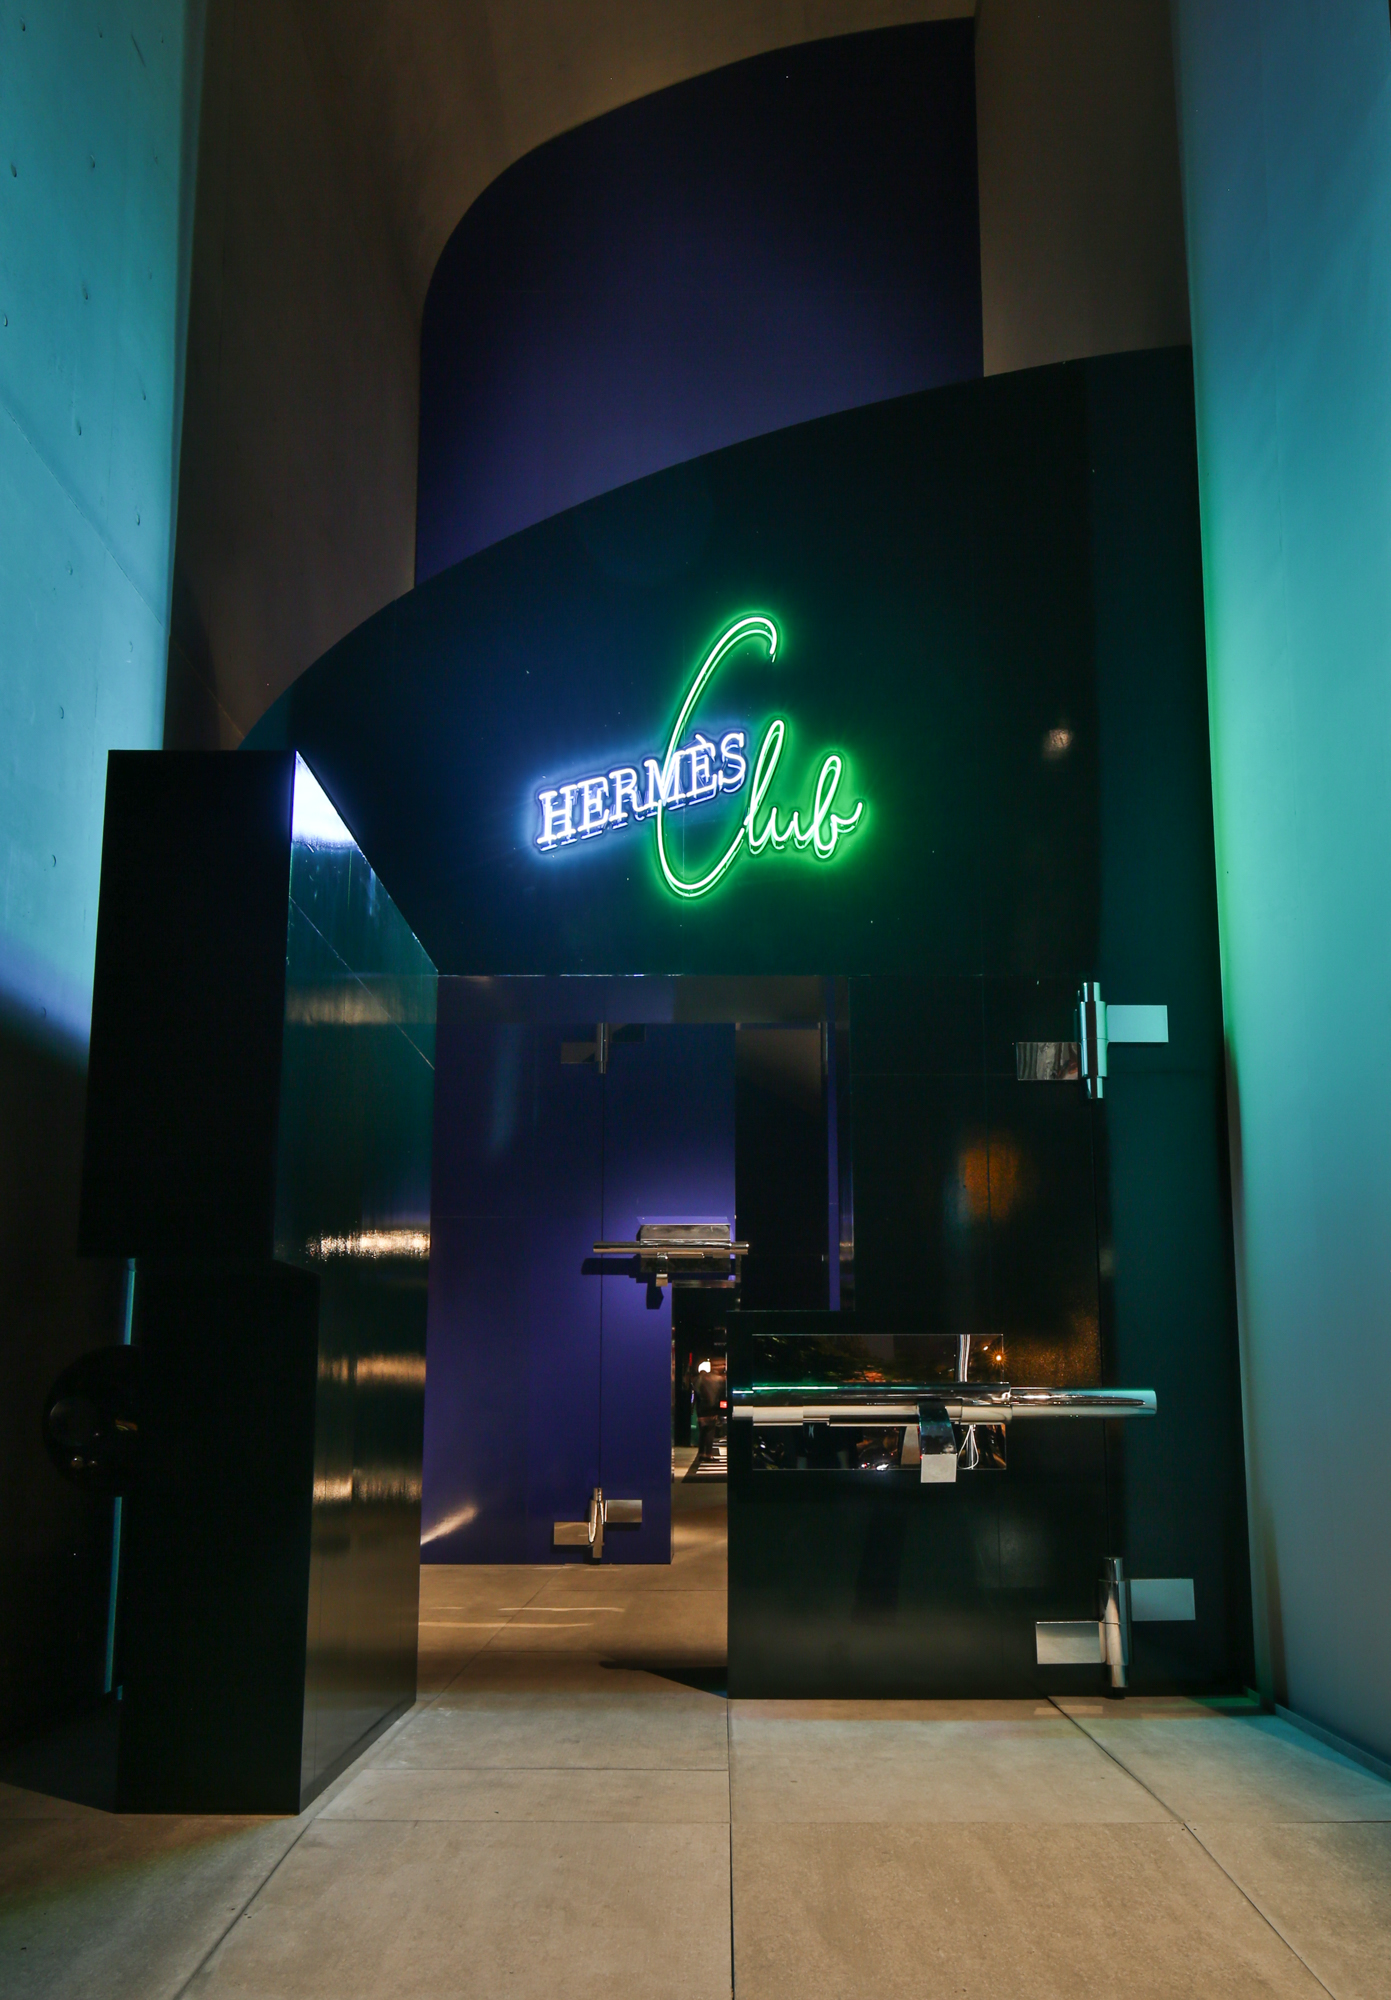 hermes-club-01-by-tao-lian-feng